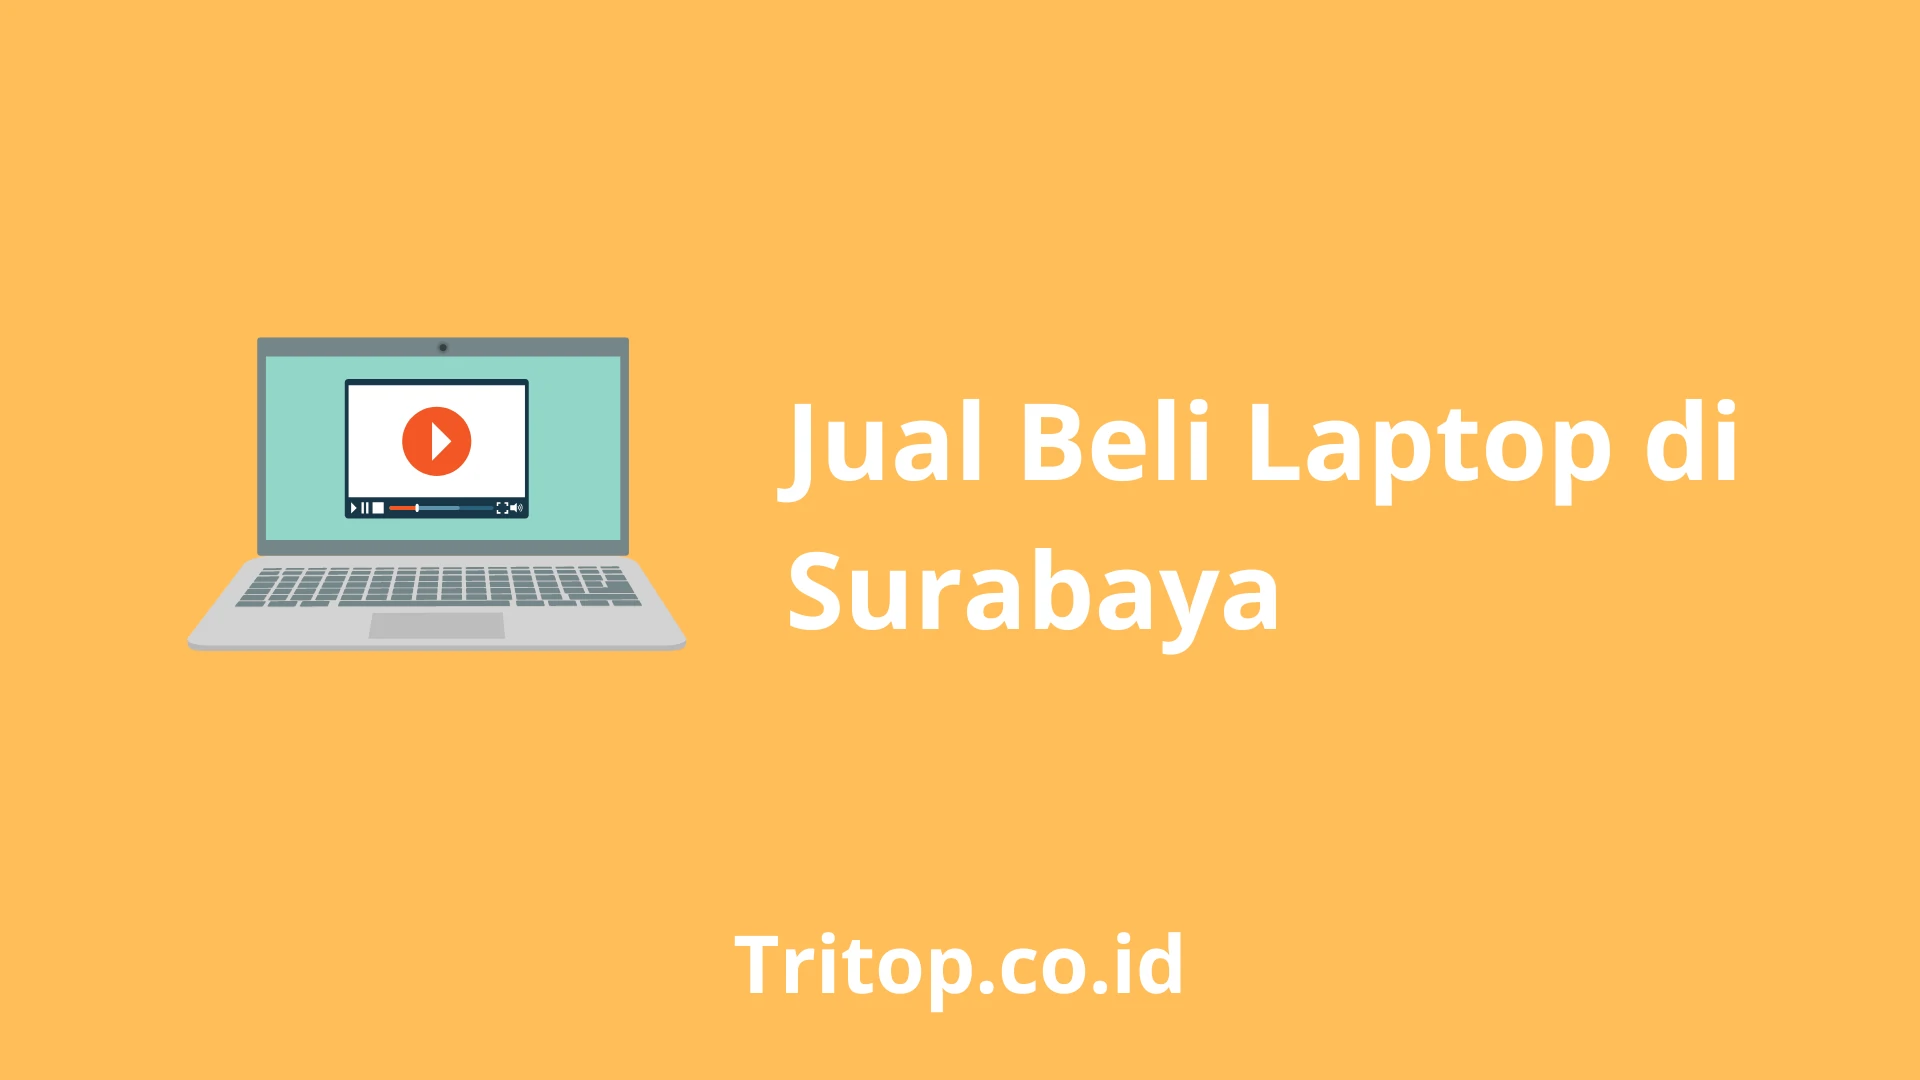 Jual Beli Laptop Surabaya tritop.co.id